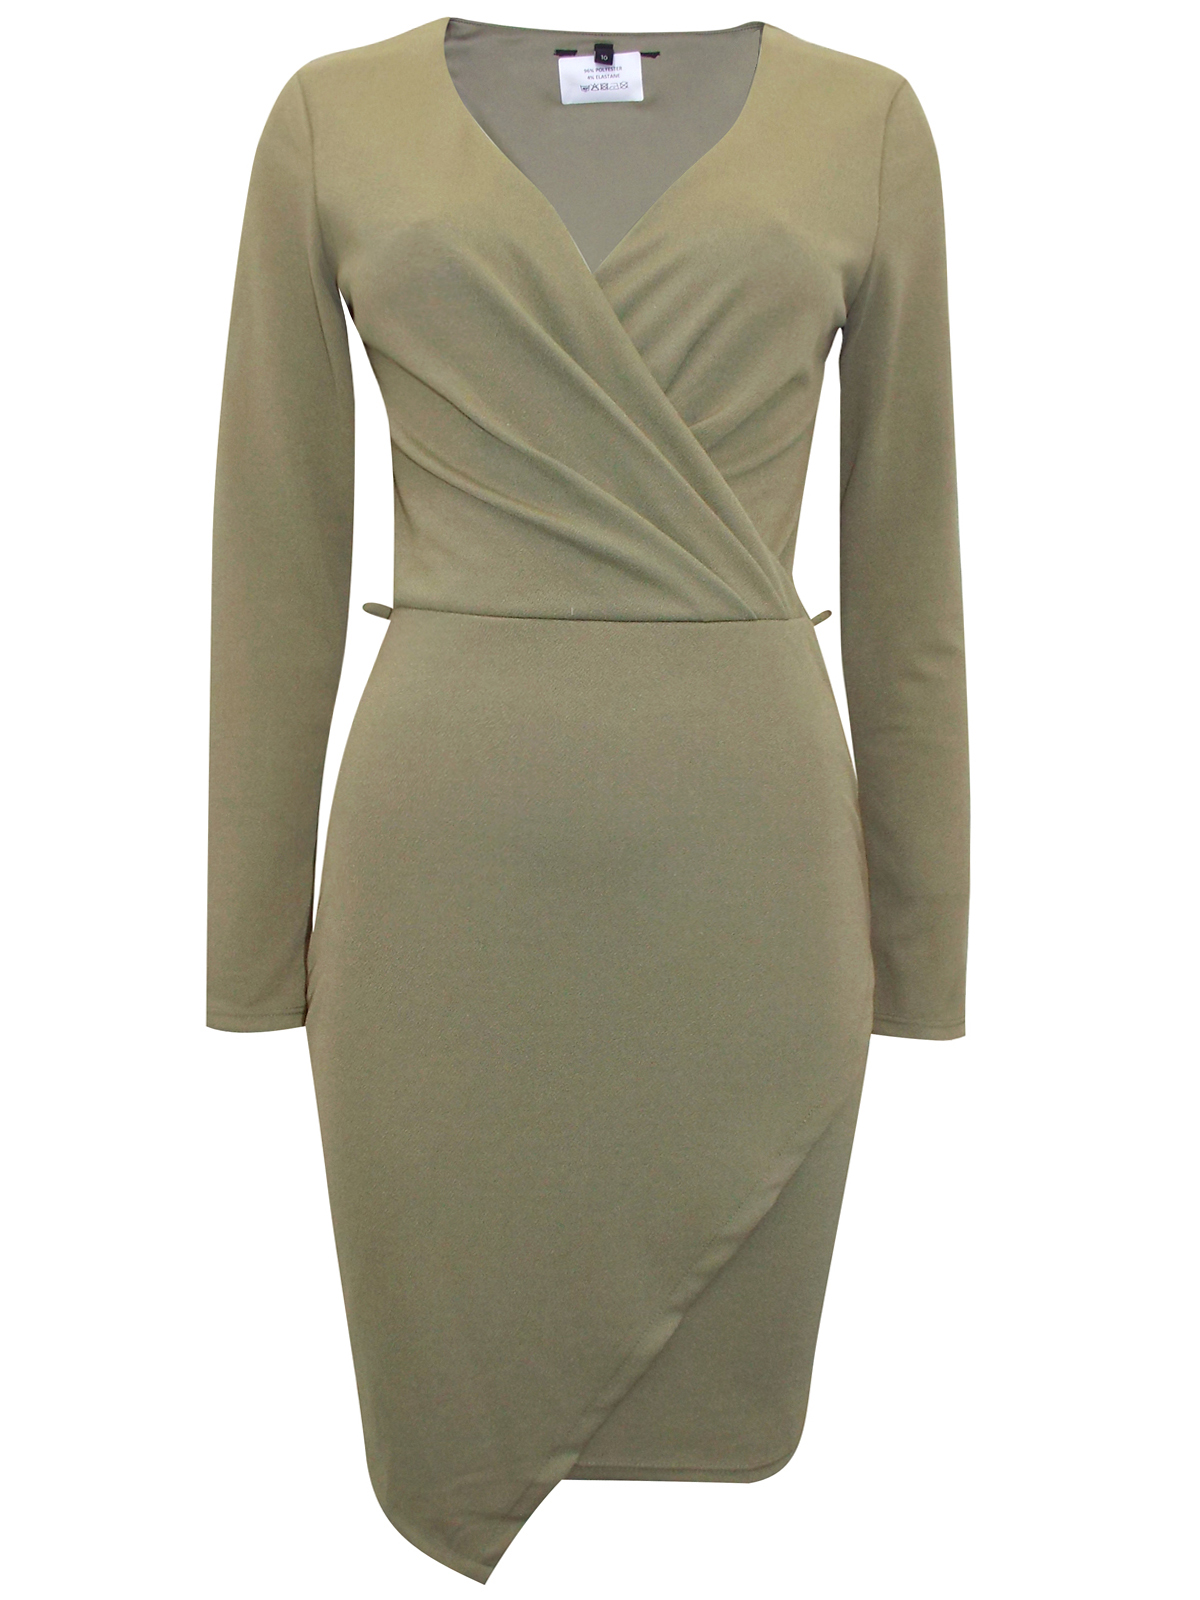 KHAKI Asymmetric Wrap Midi Dress - Size 6 to 14